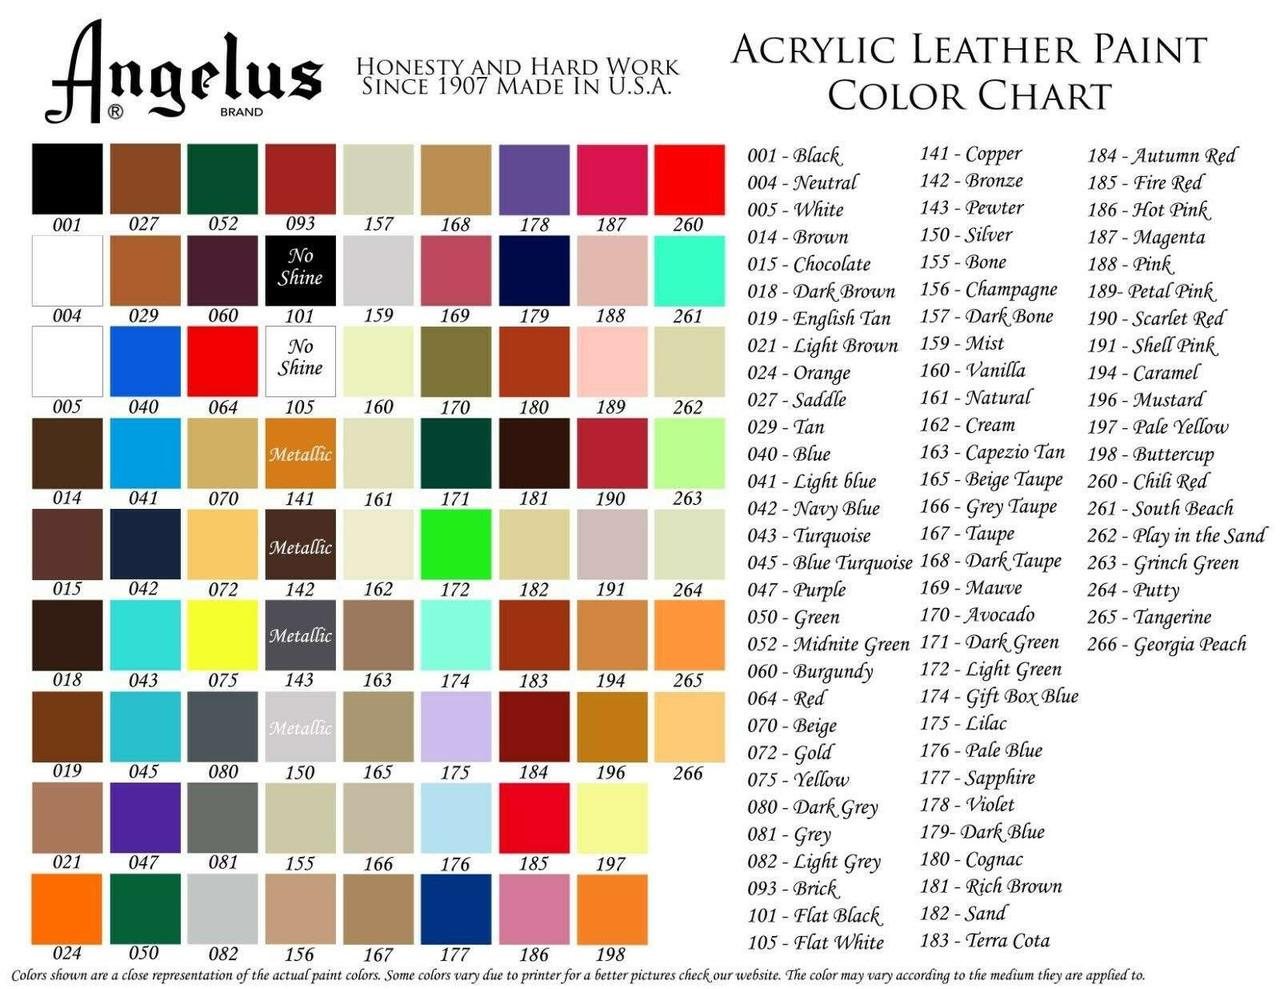 Angelus Acrylic Leather Paint Waterproof Sneaker Paint 1oz - 82